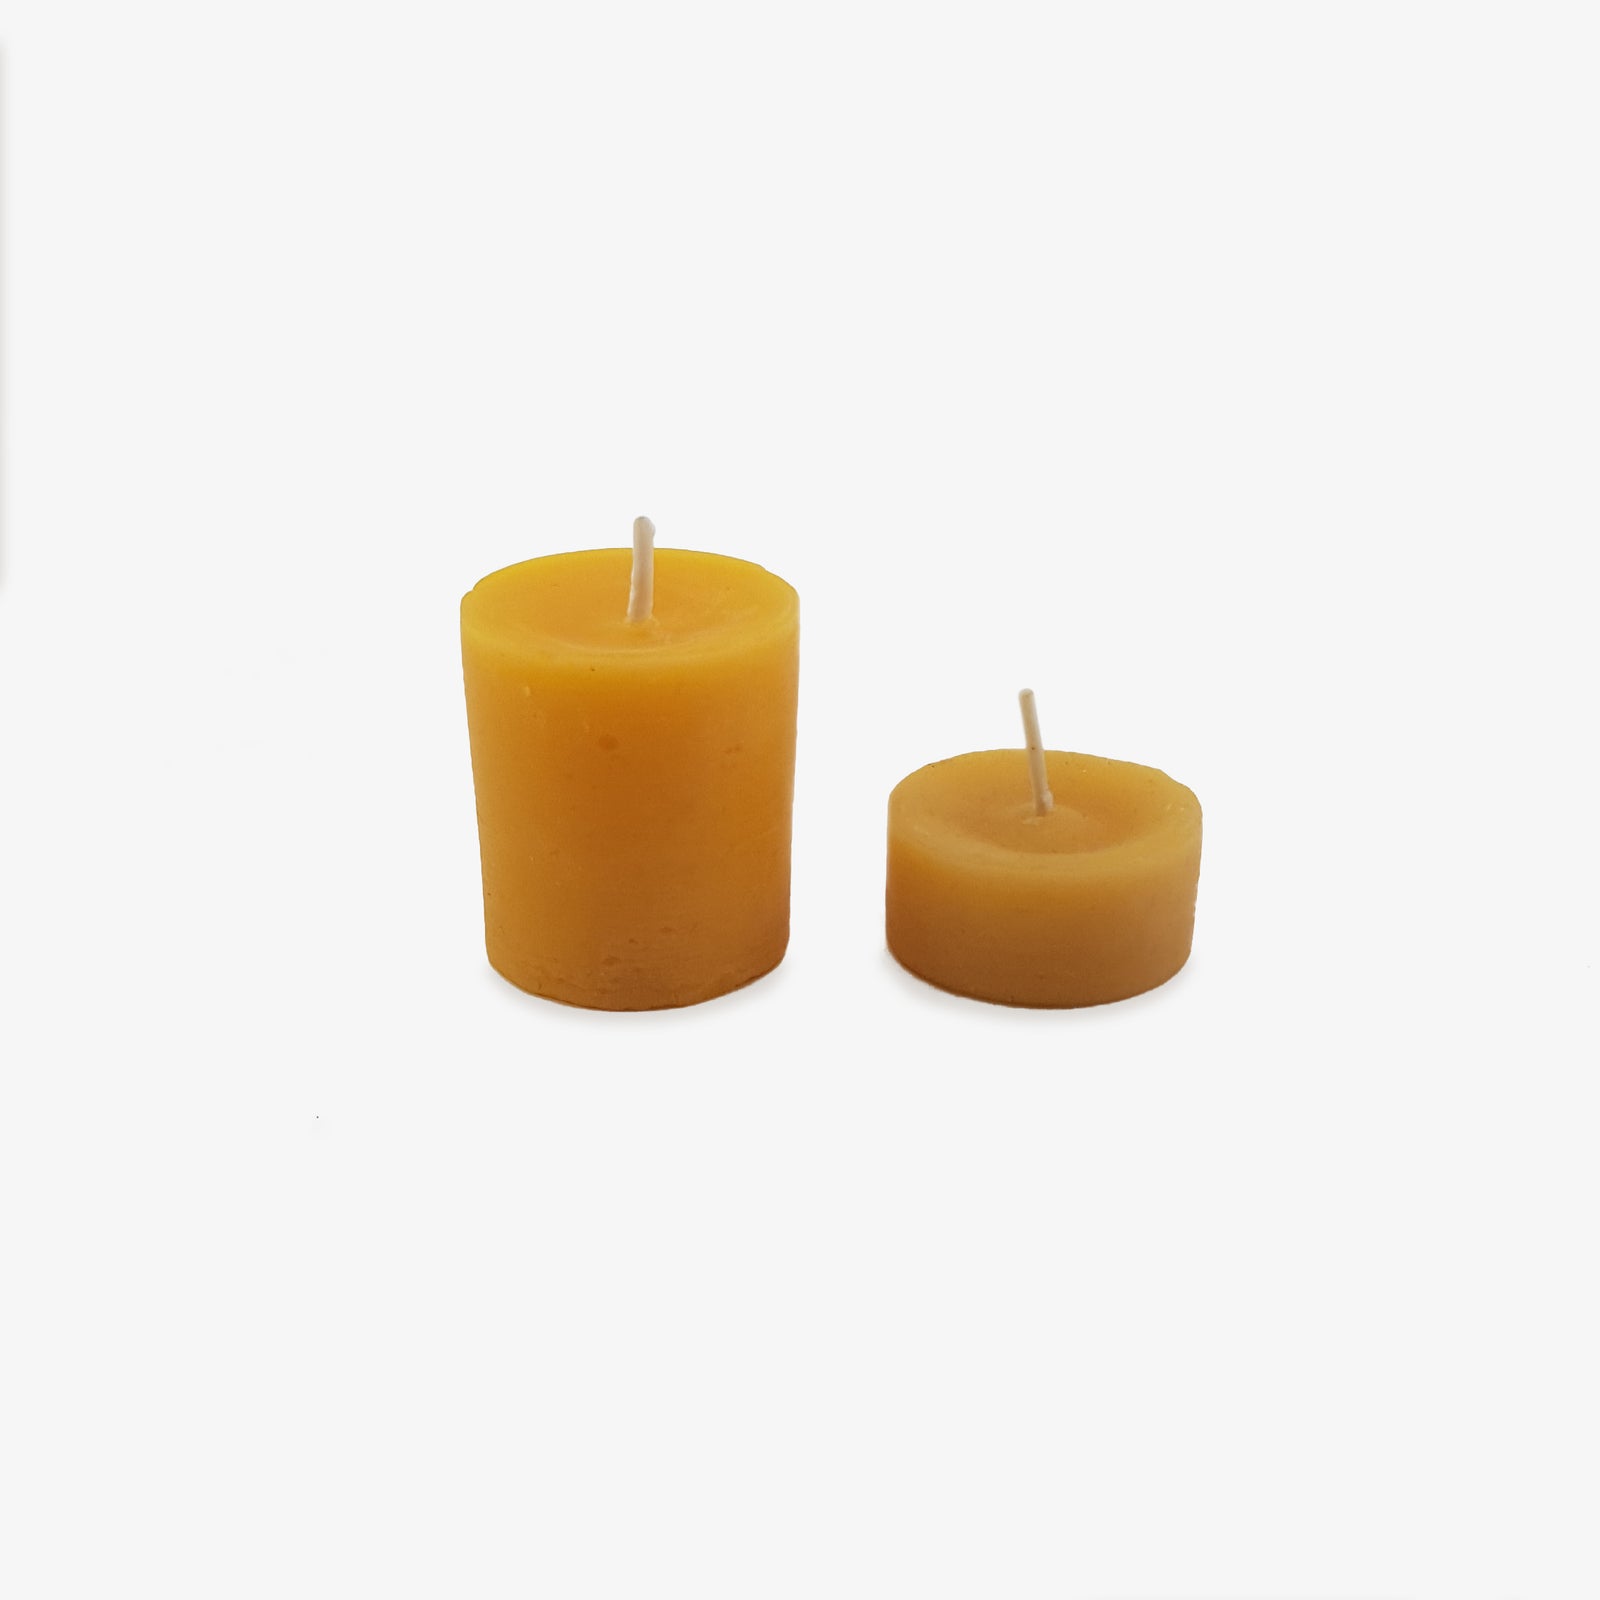 Stumpy Bees Wax Candles